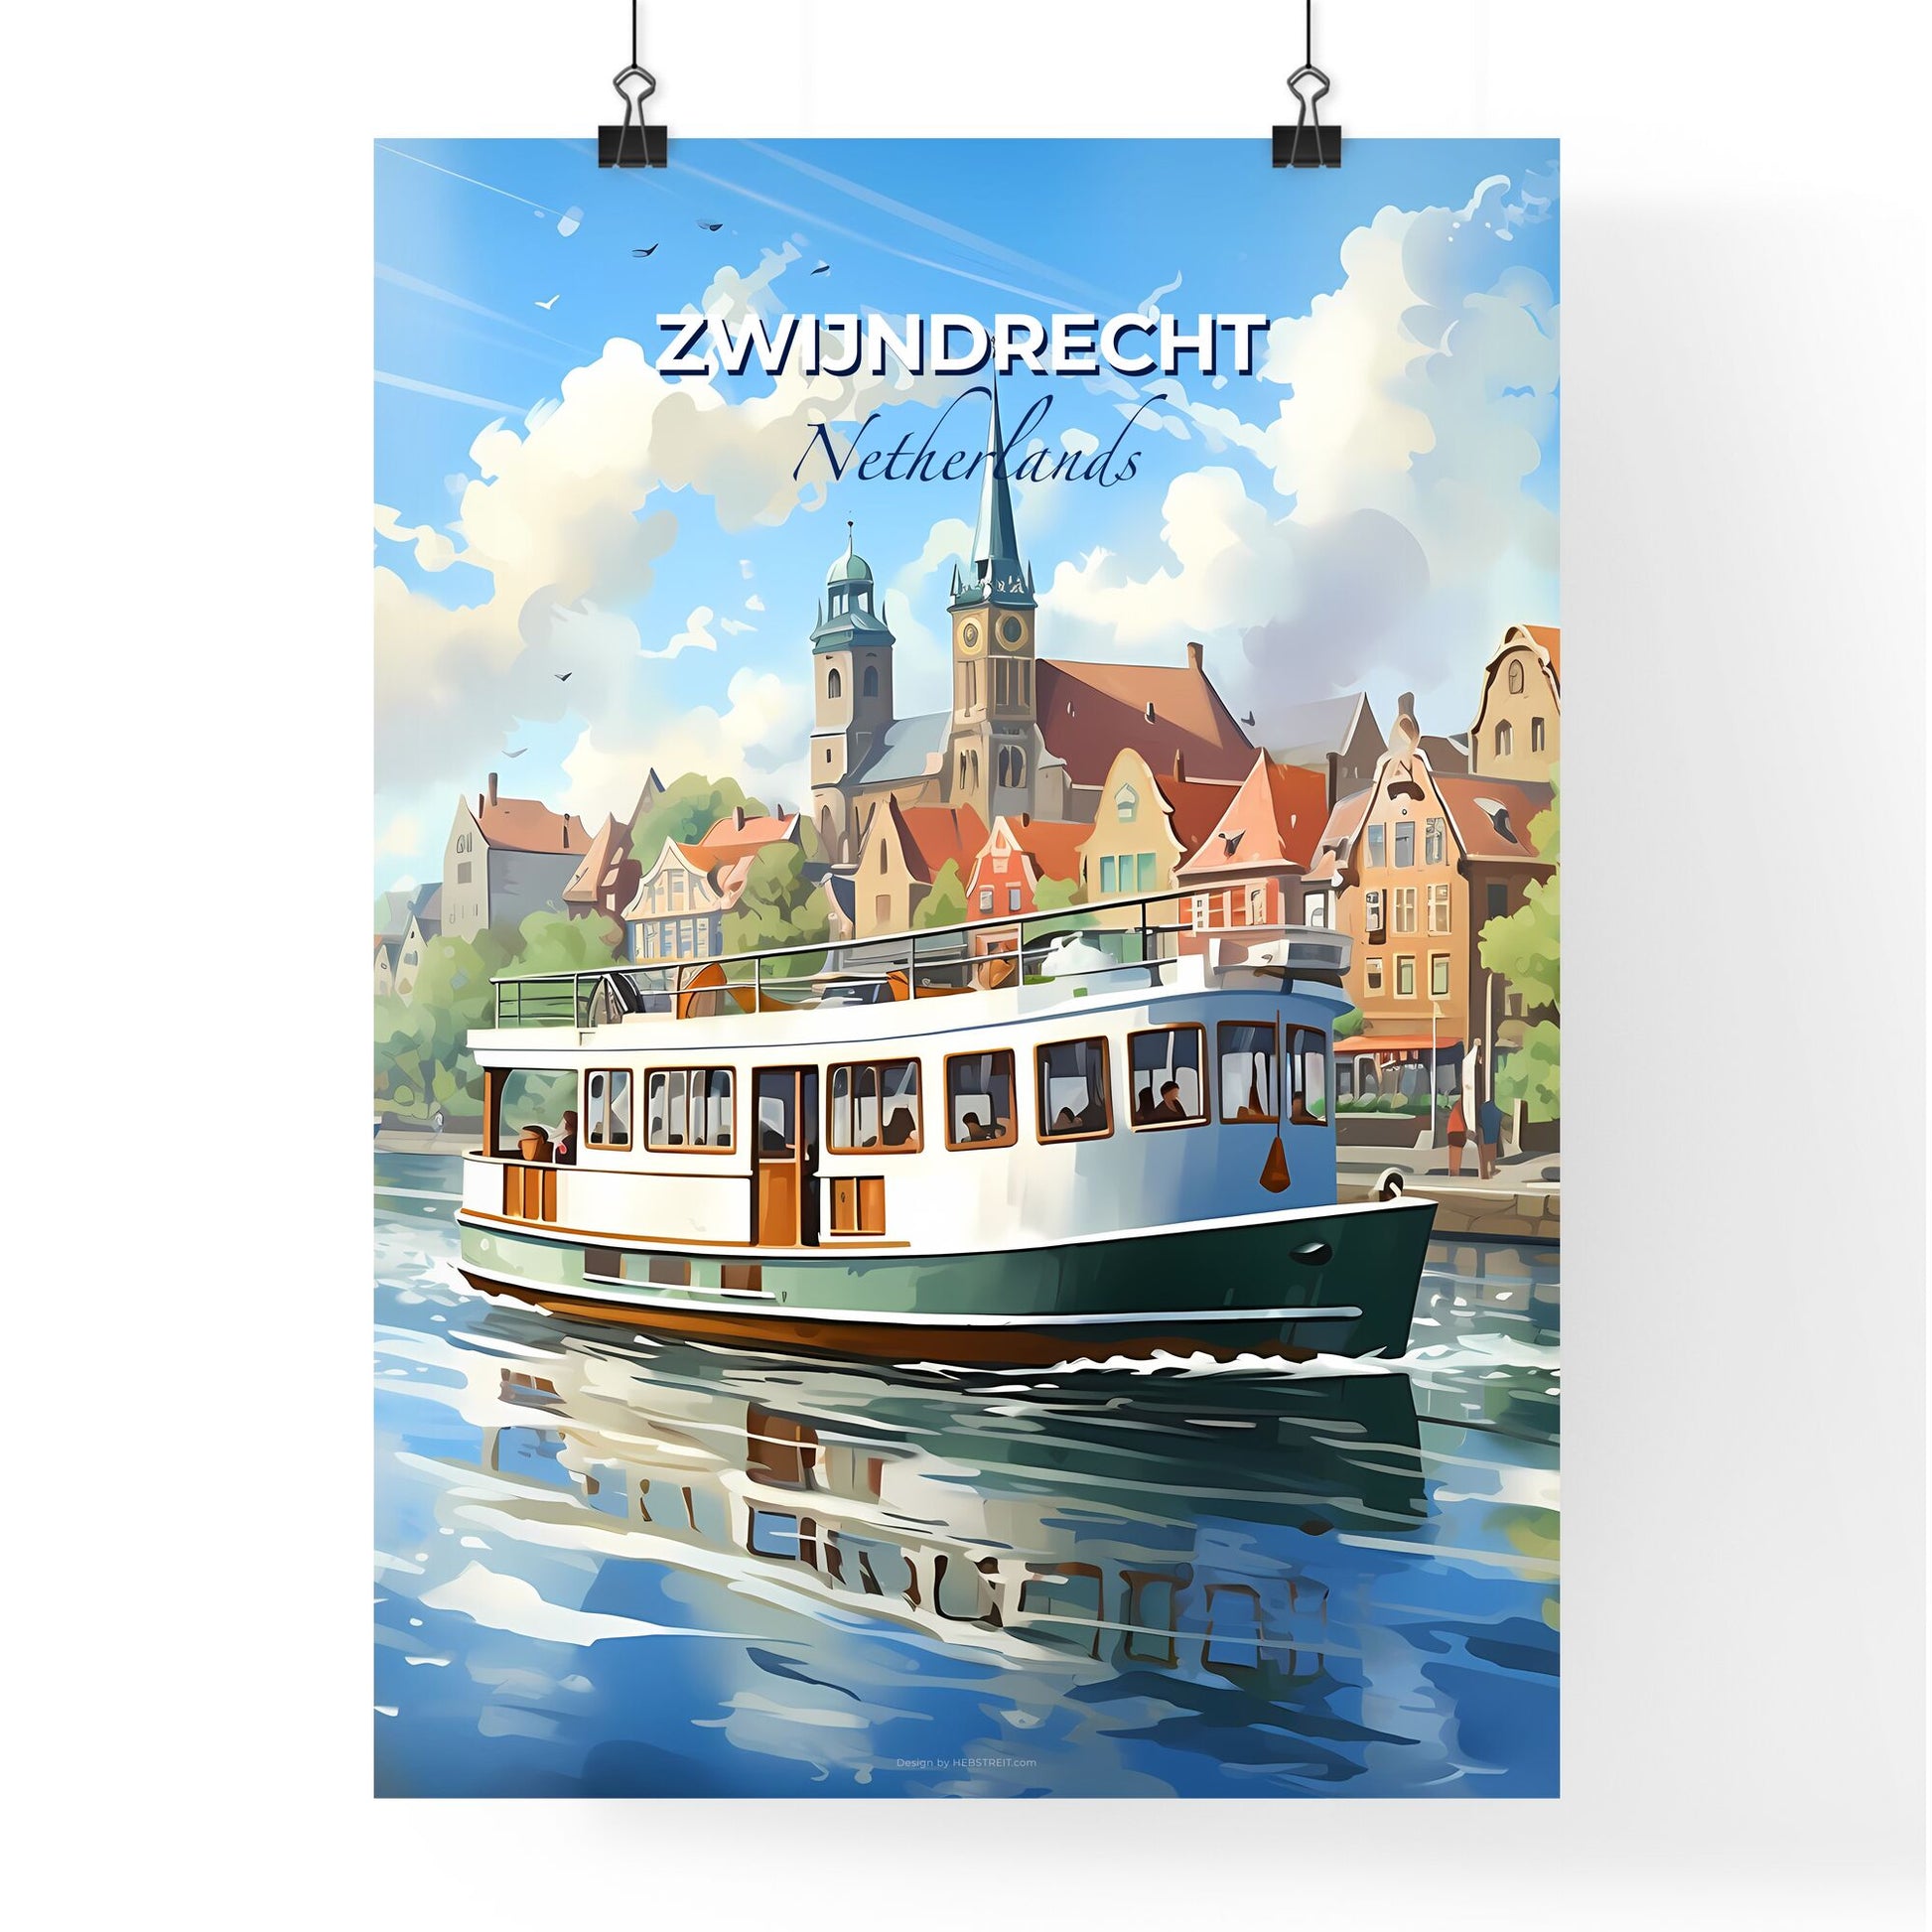 Zwijndrecht, Netherlands, A Poster of a boat on a river Default Title